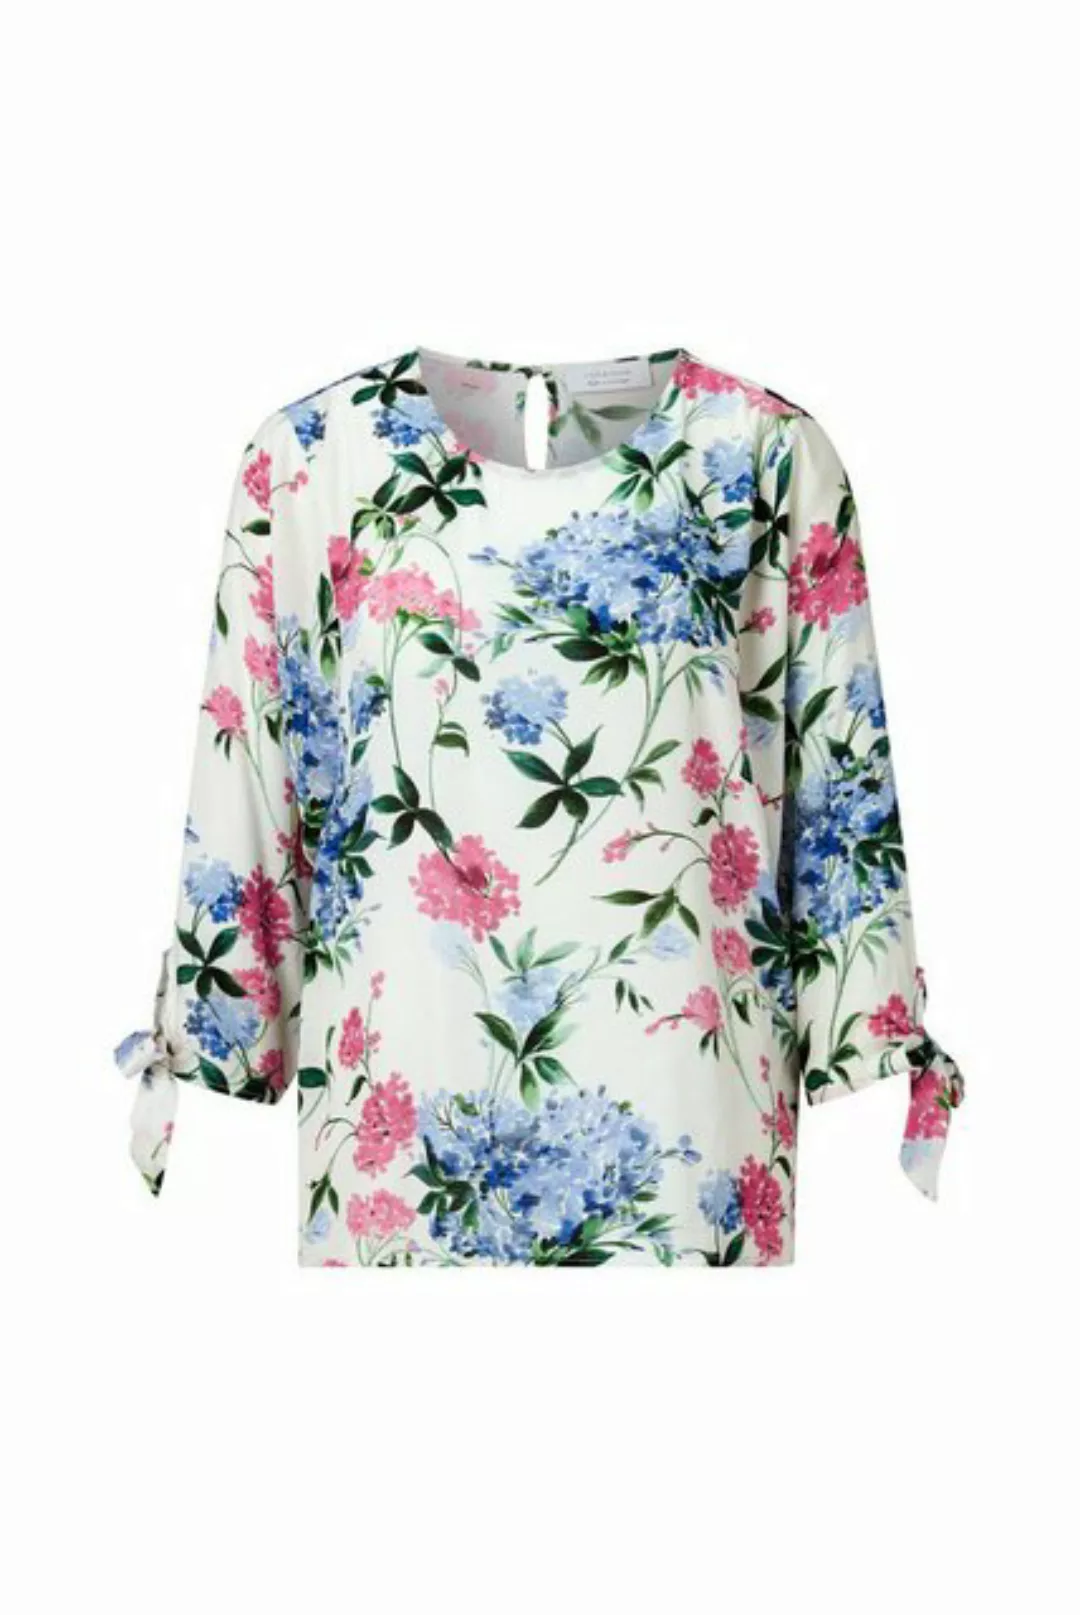 Rich & Royal Blusenshirt printed blouse ecovero günstig online kaufen